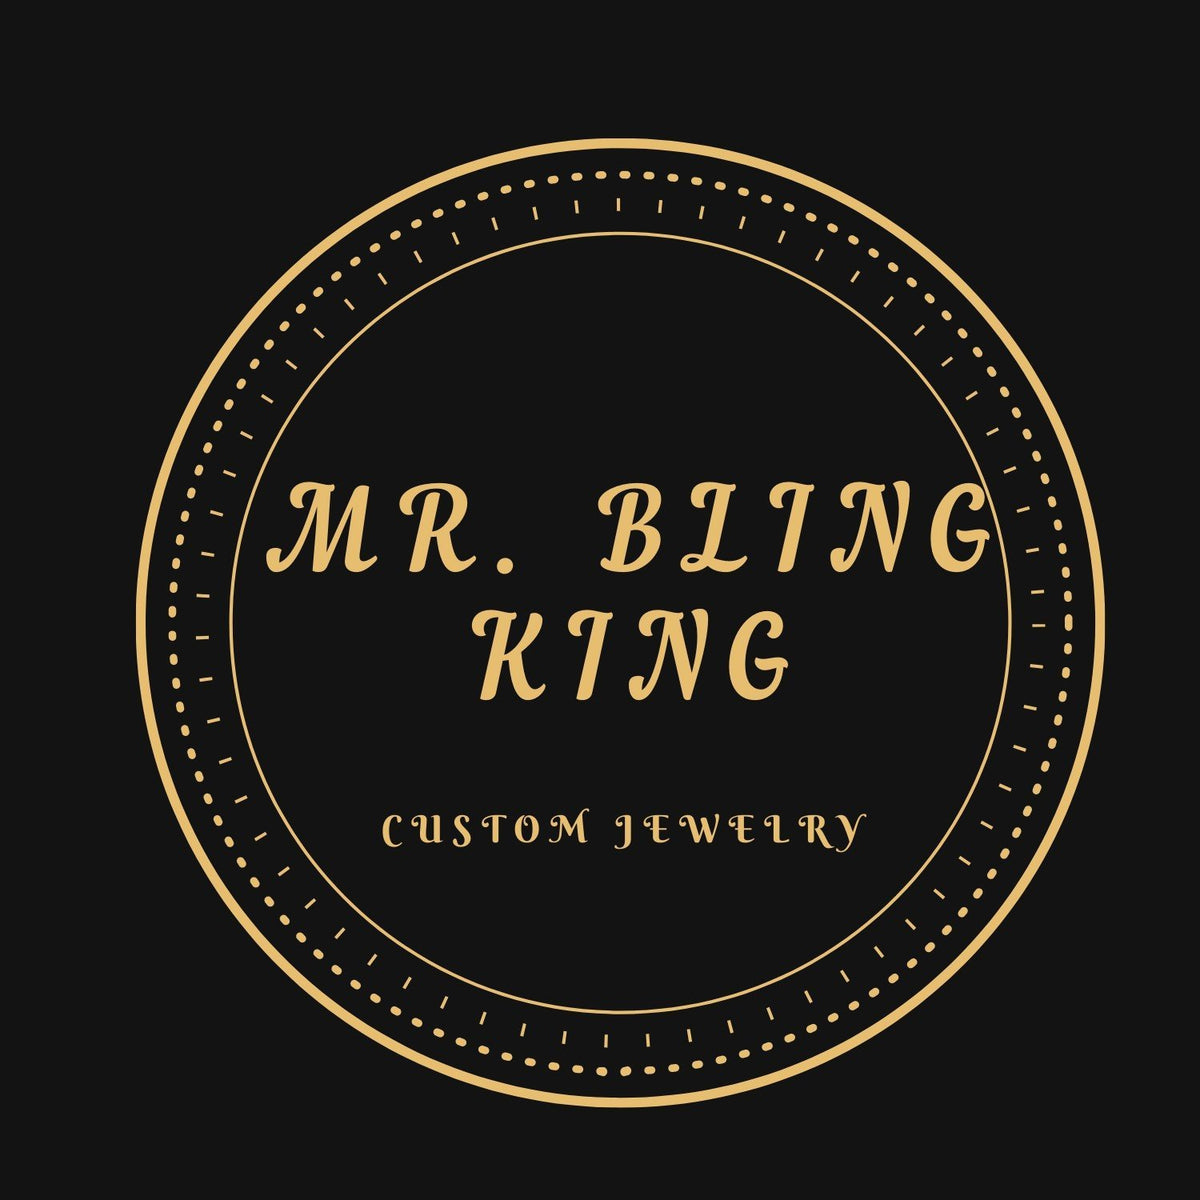 King Custom